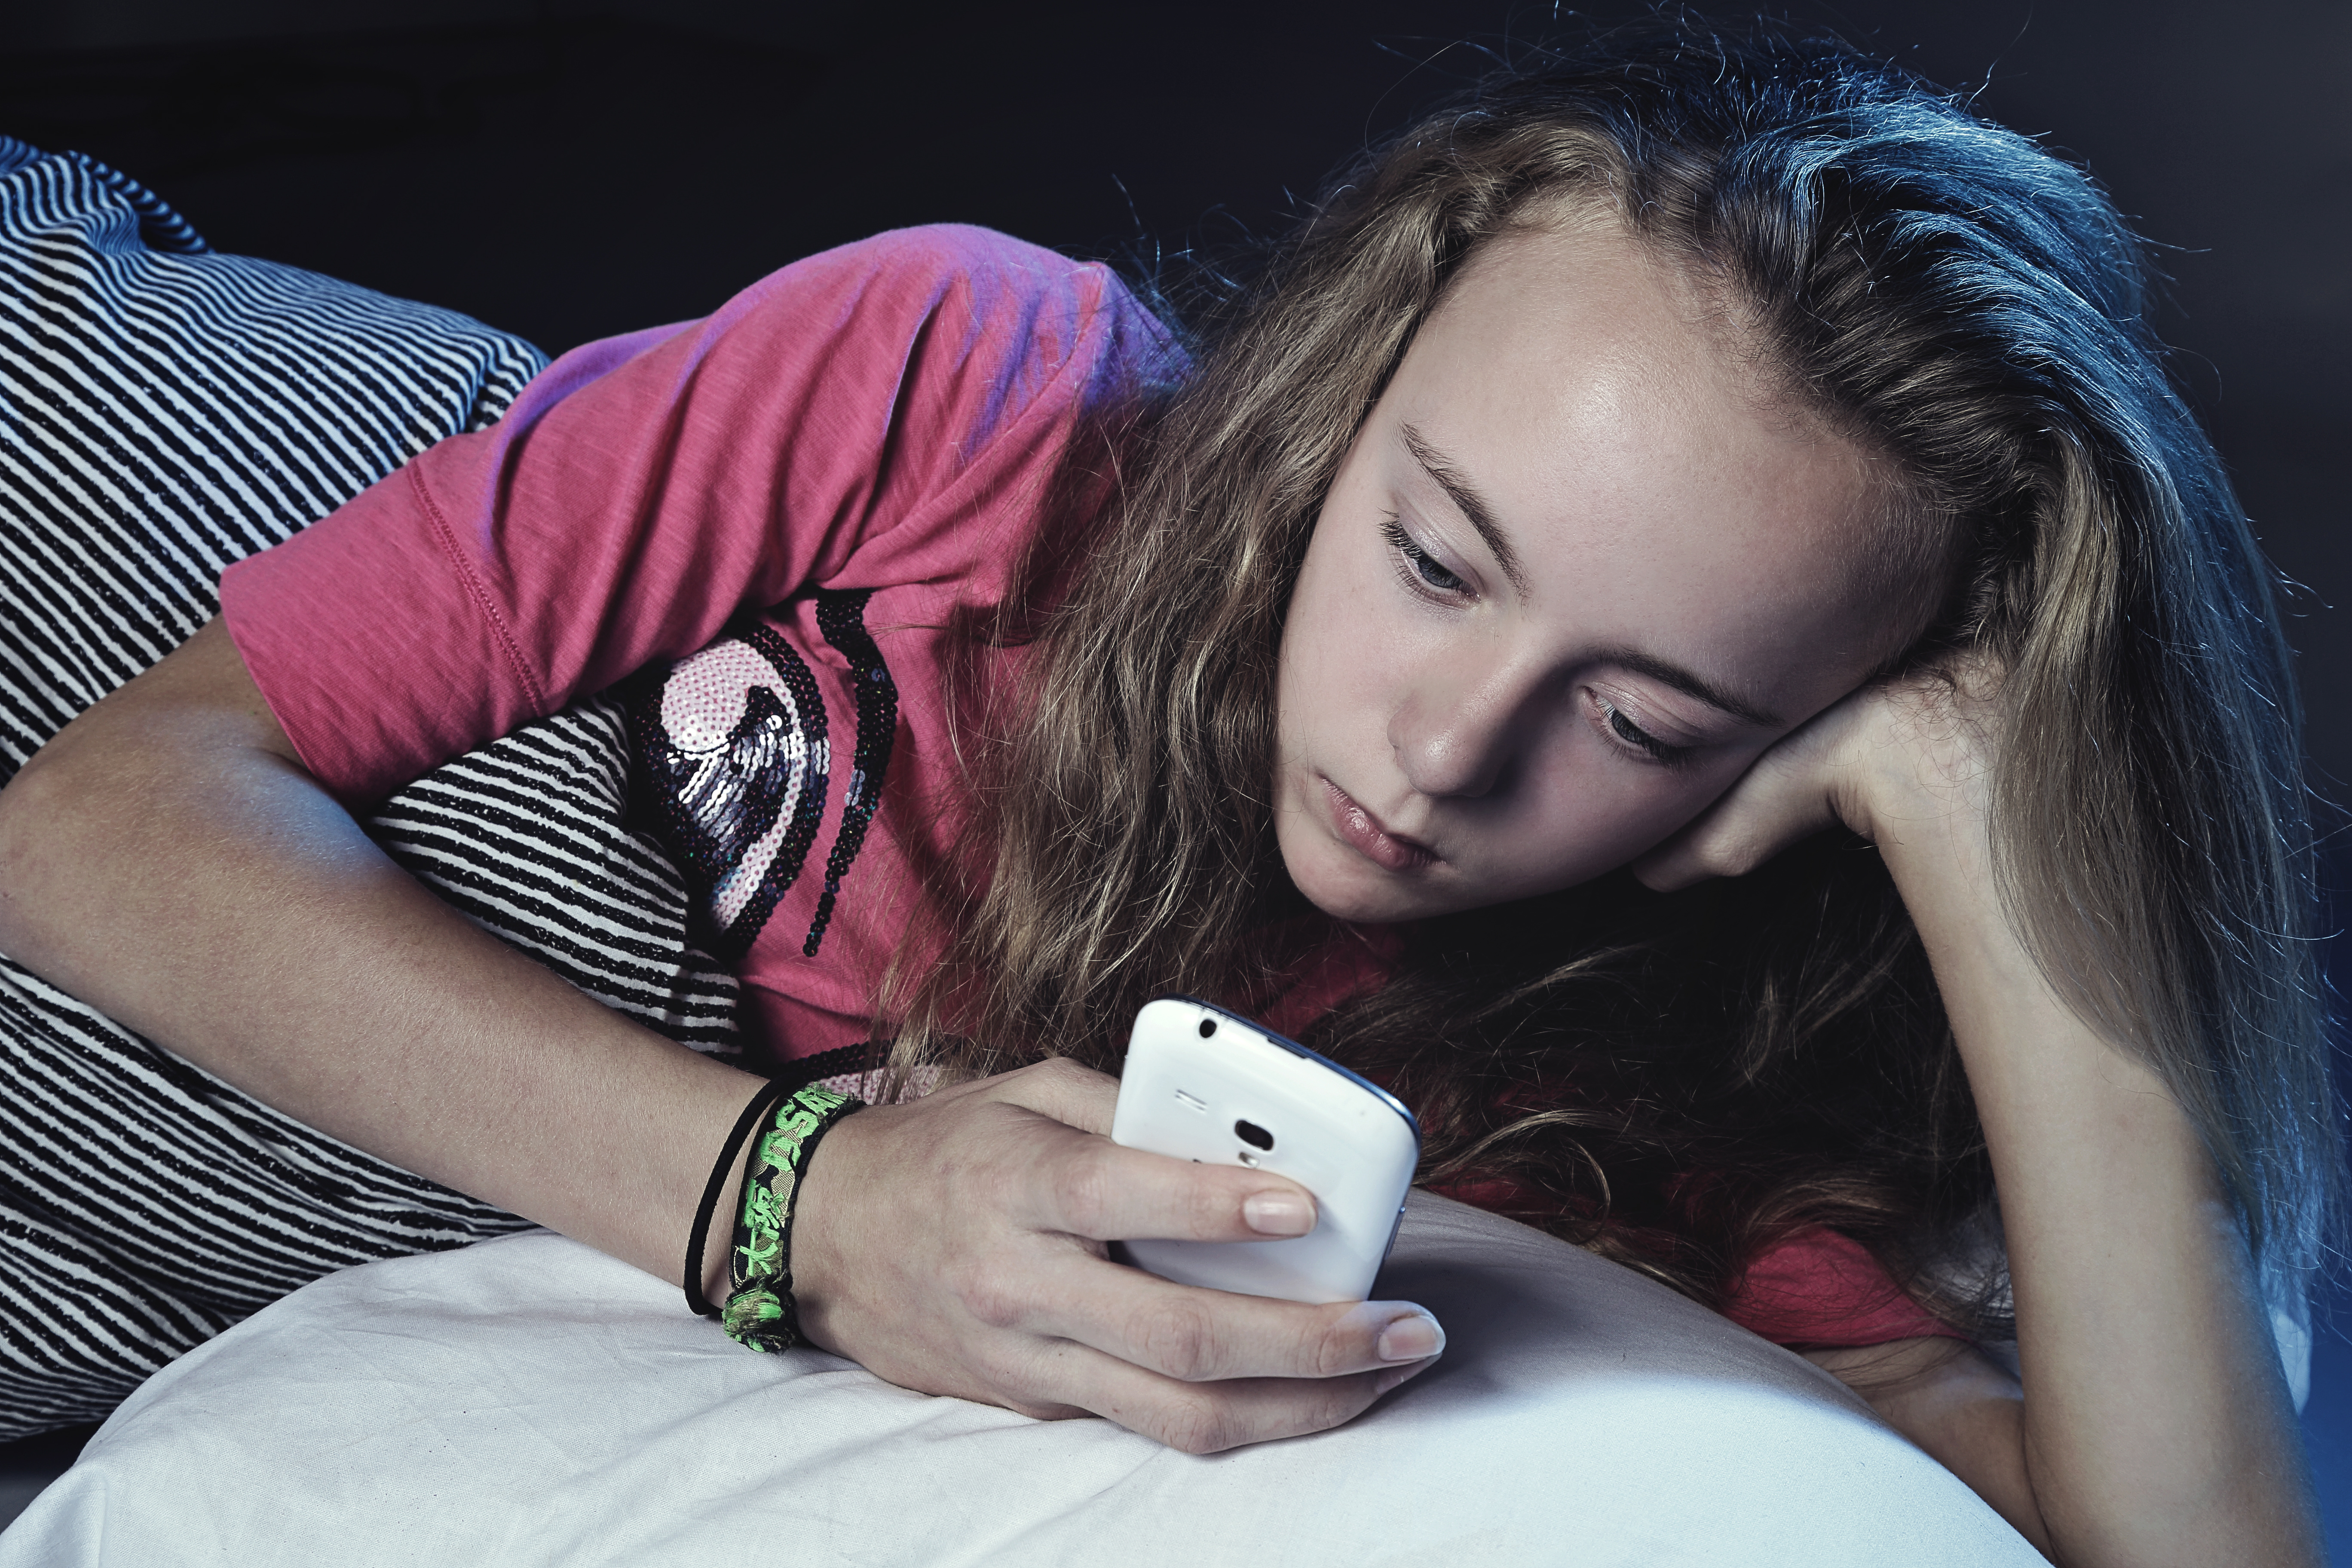 symptoms of insomnia in teenagers